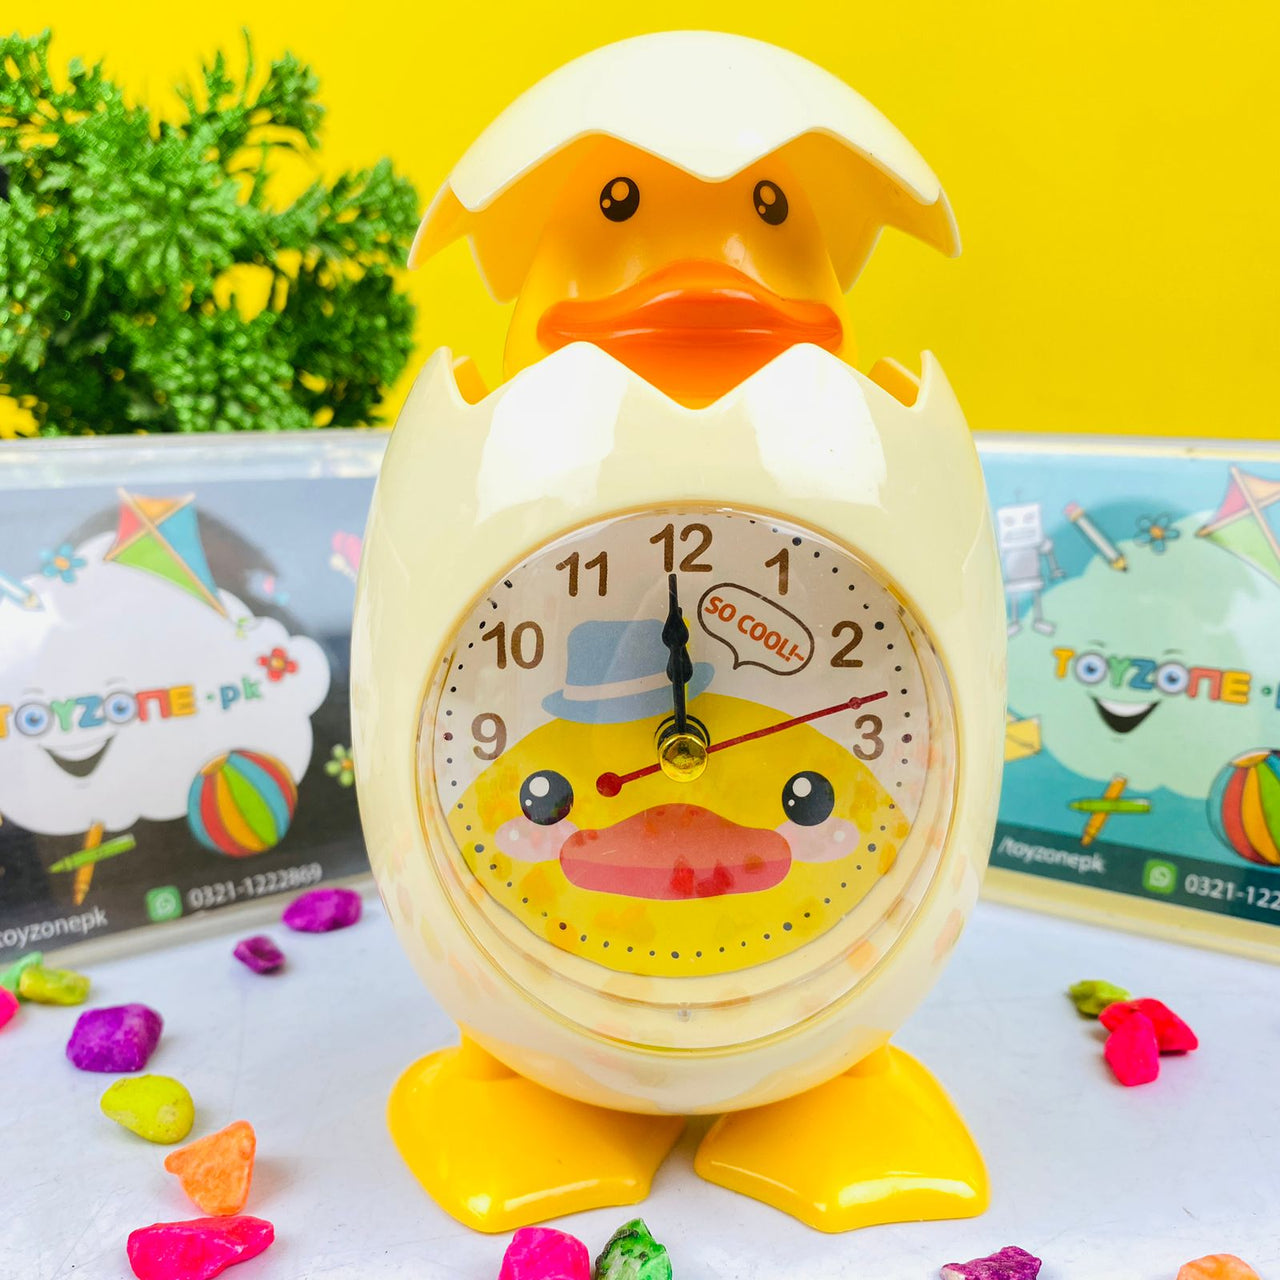 duck shaped table alarm clock